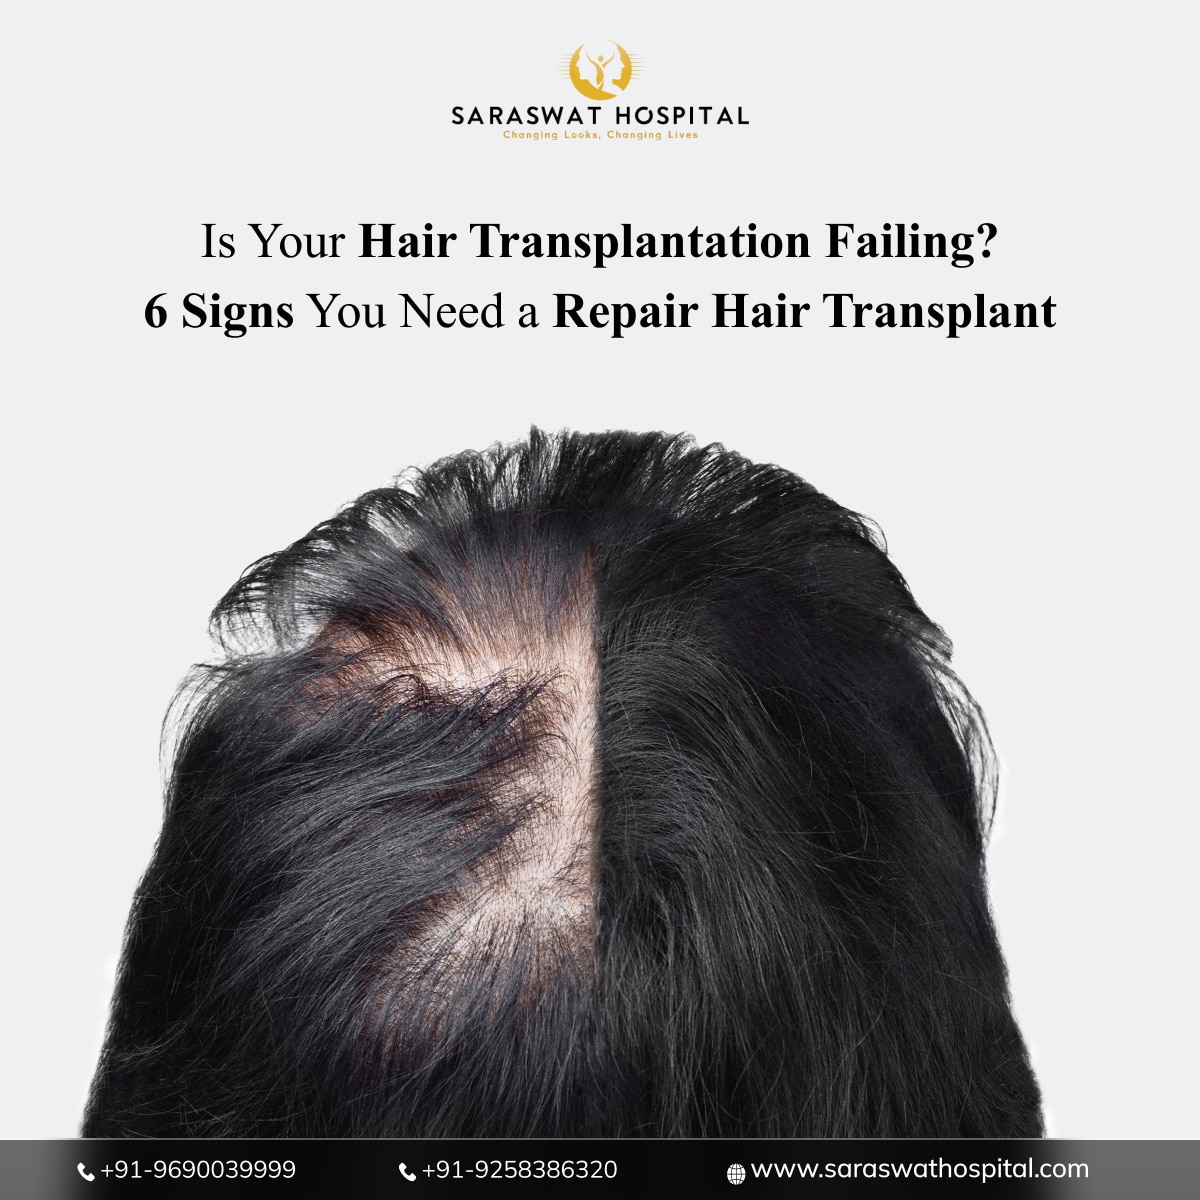 6 Signs You Need a Repair Hair Transplant